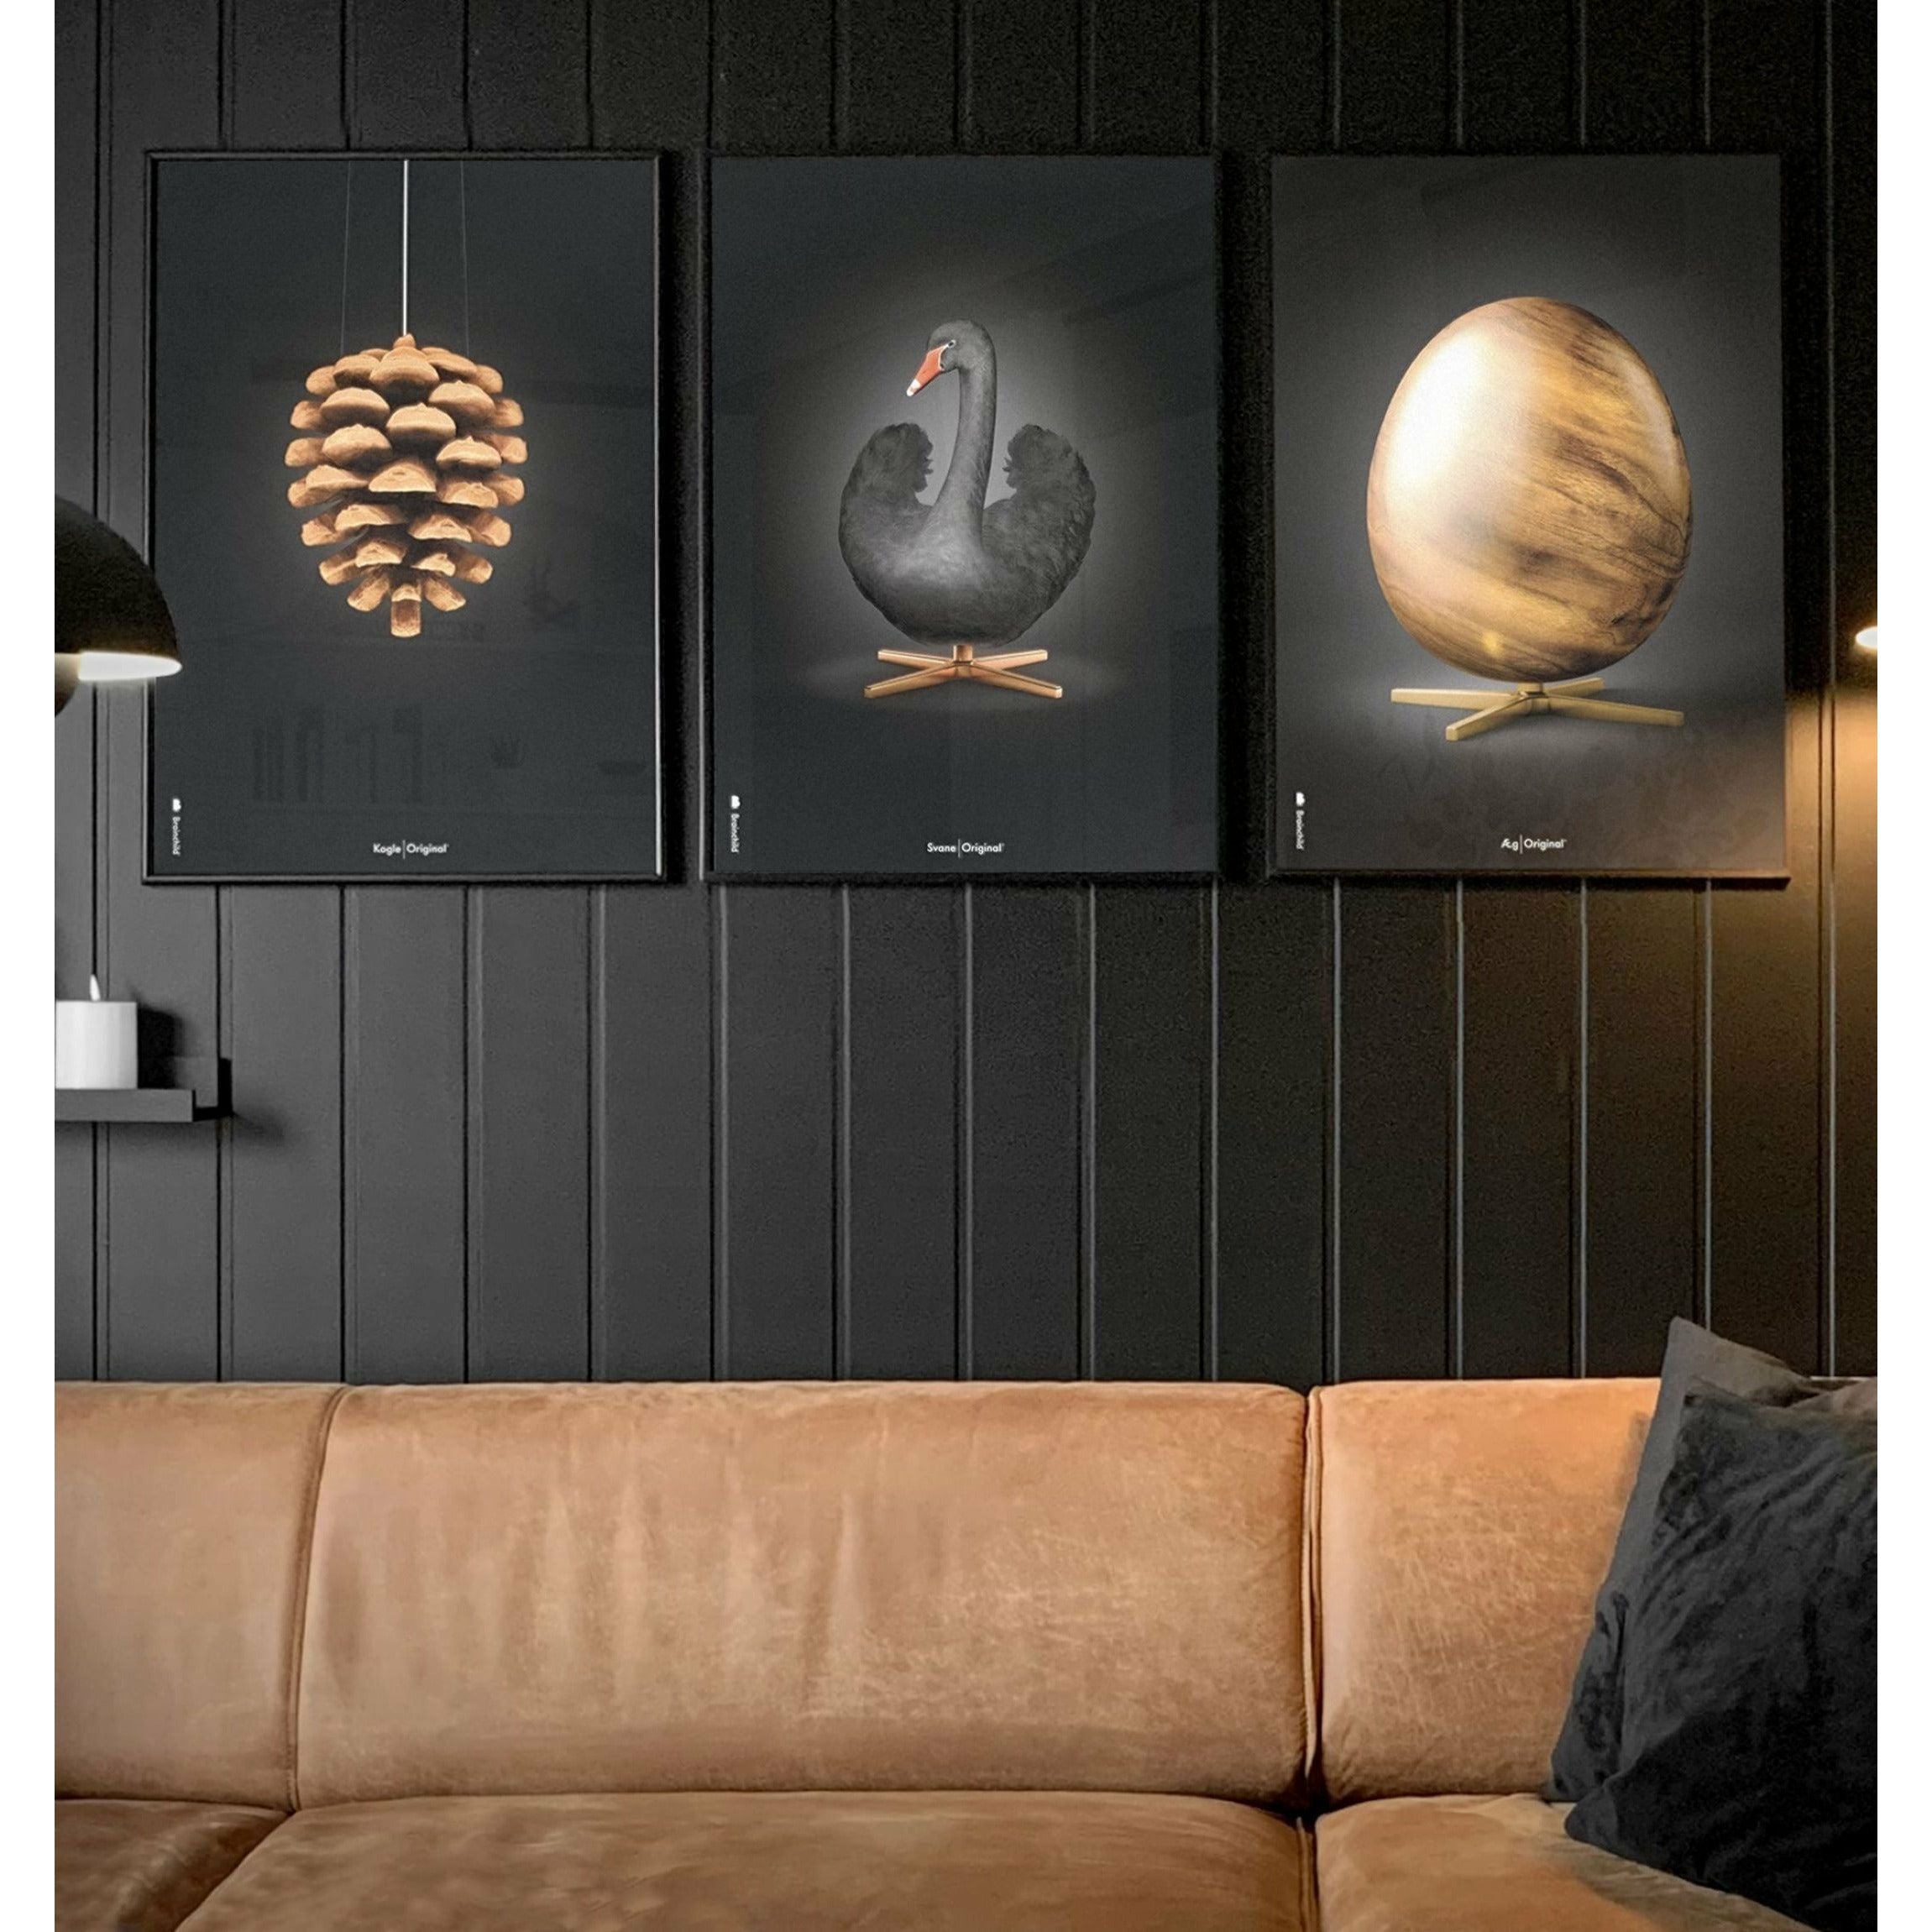 Brainchild Swan Classic Poster, Dark Wood Frame 70 X100 Cm, Black/Black Background